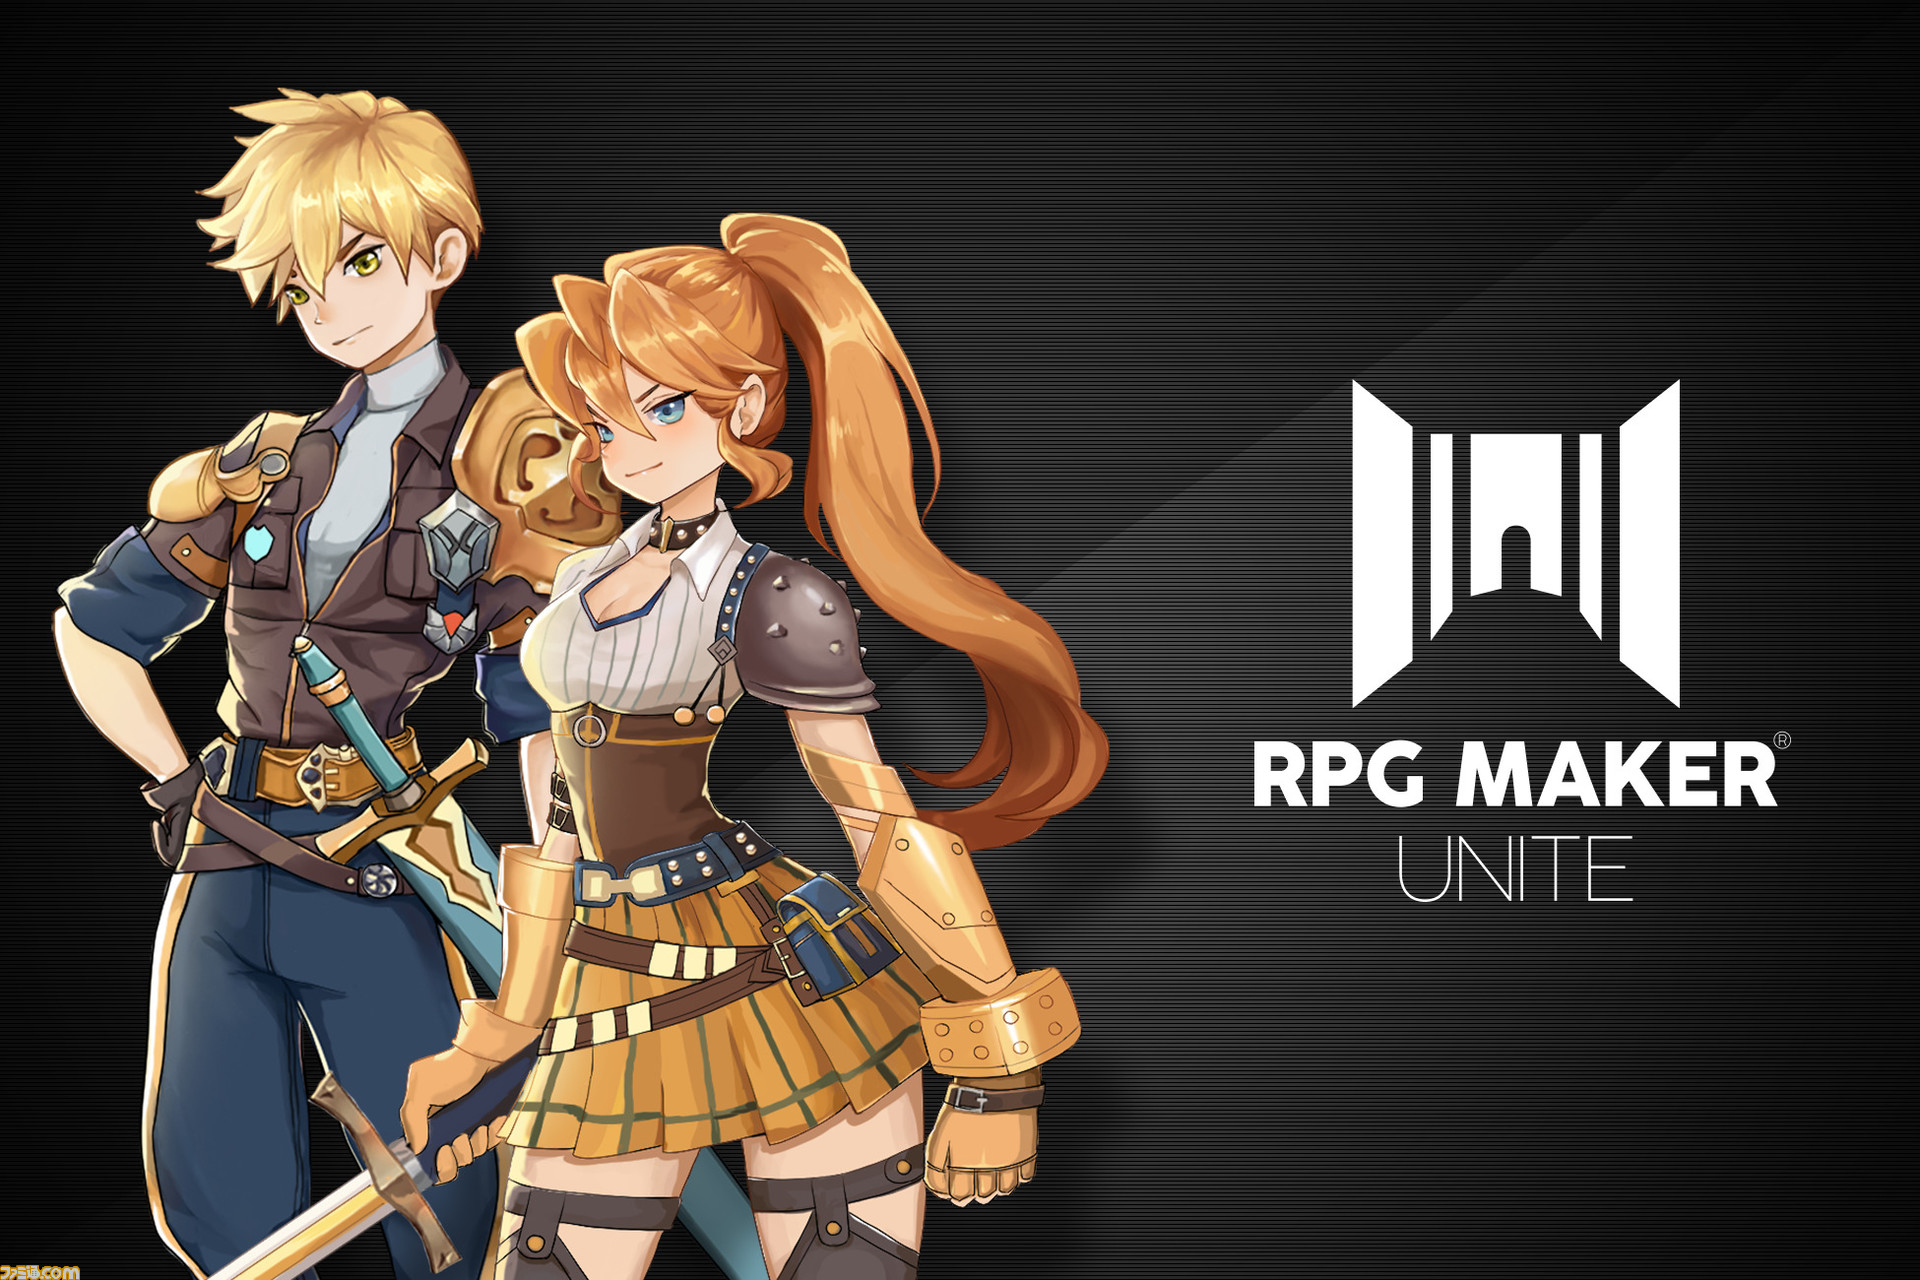 RPGツクール新作RPG Maker Unite本日発売。コードを使わ